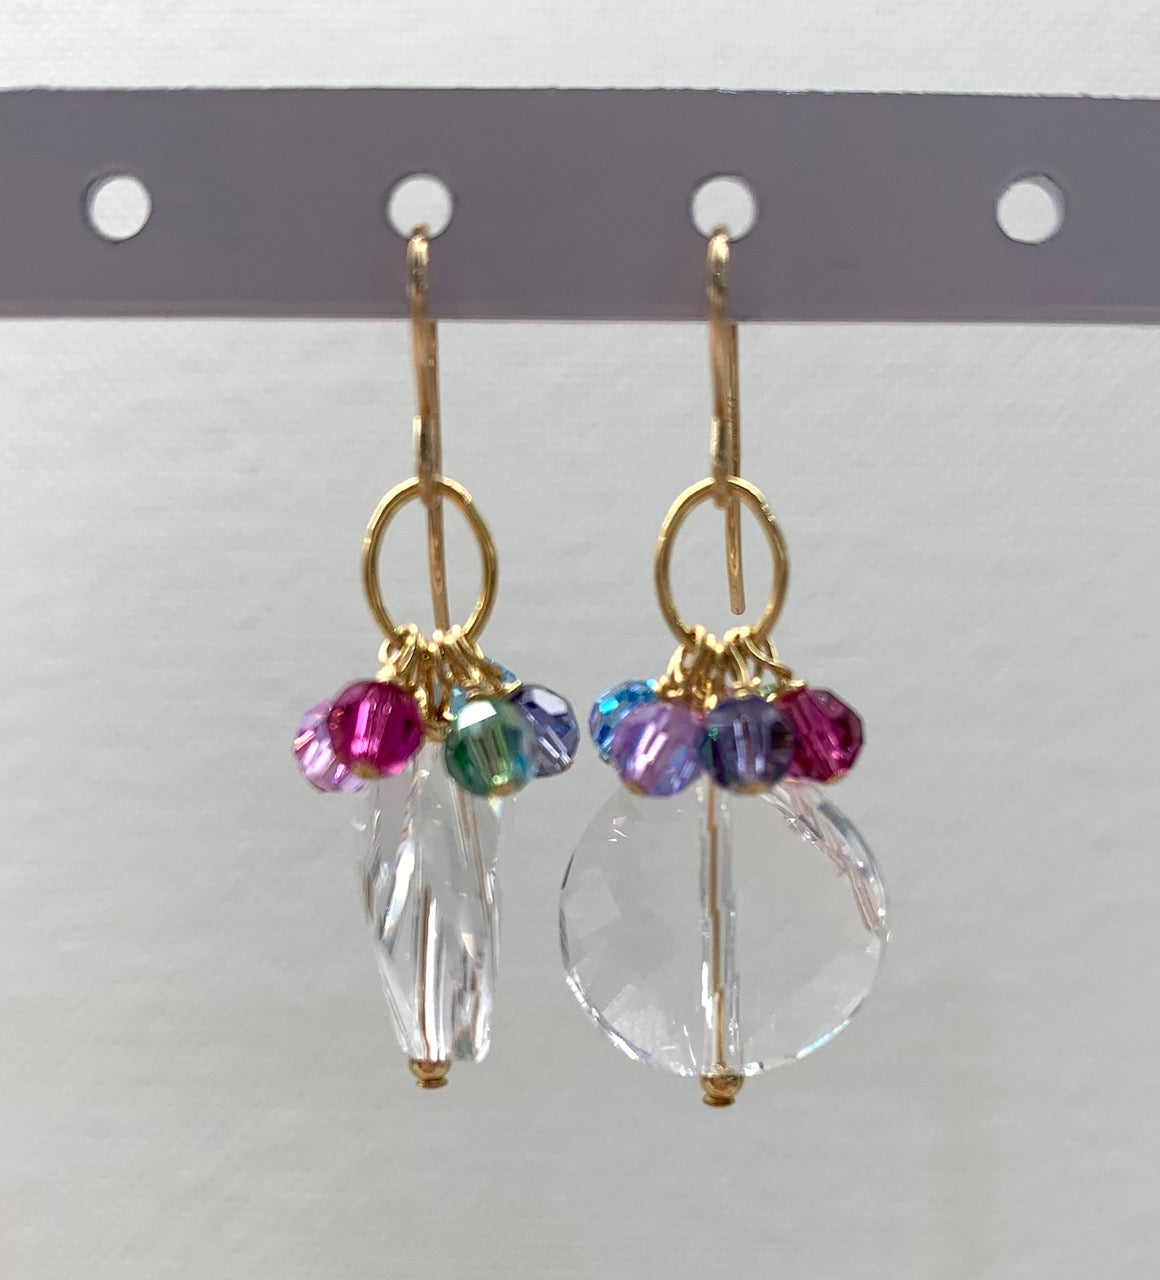 Share 225+ coloured crystal earrings